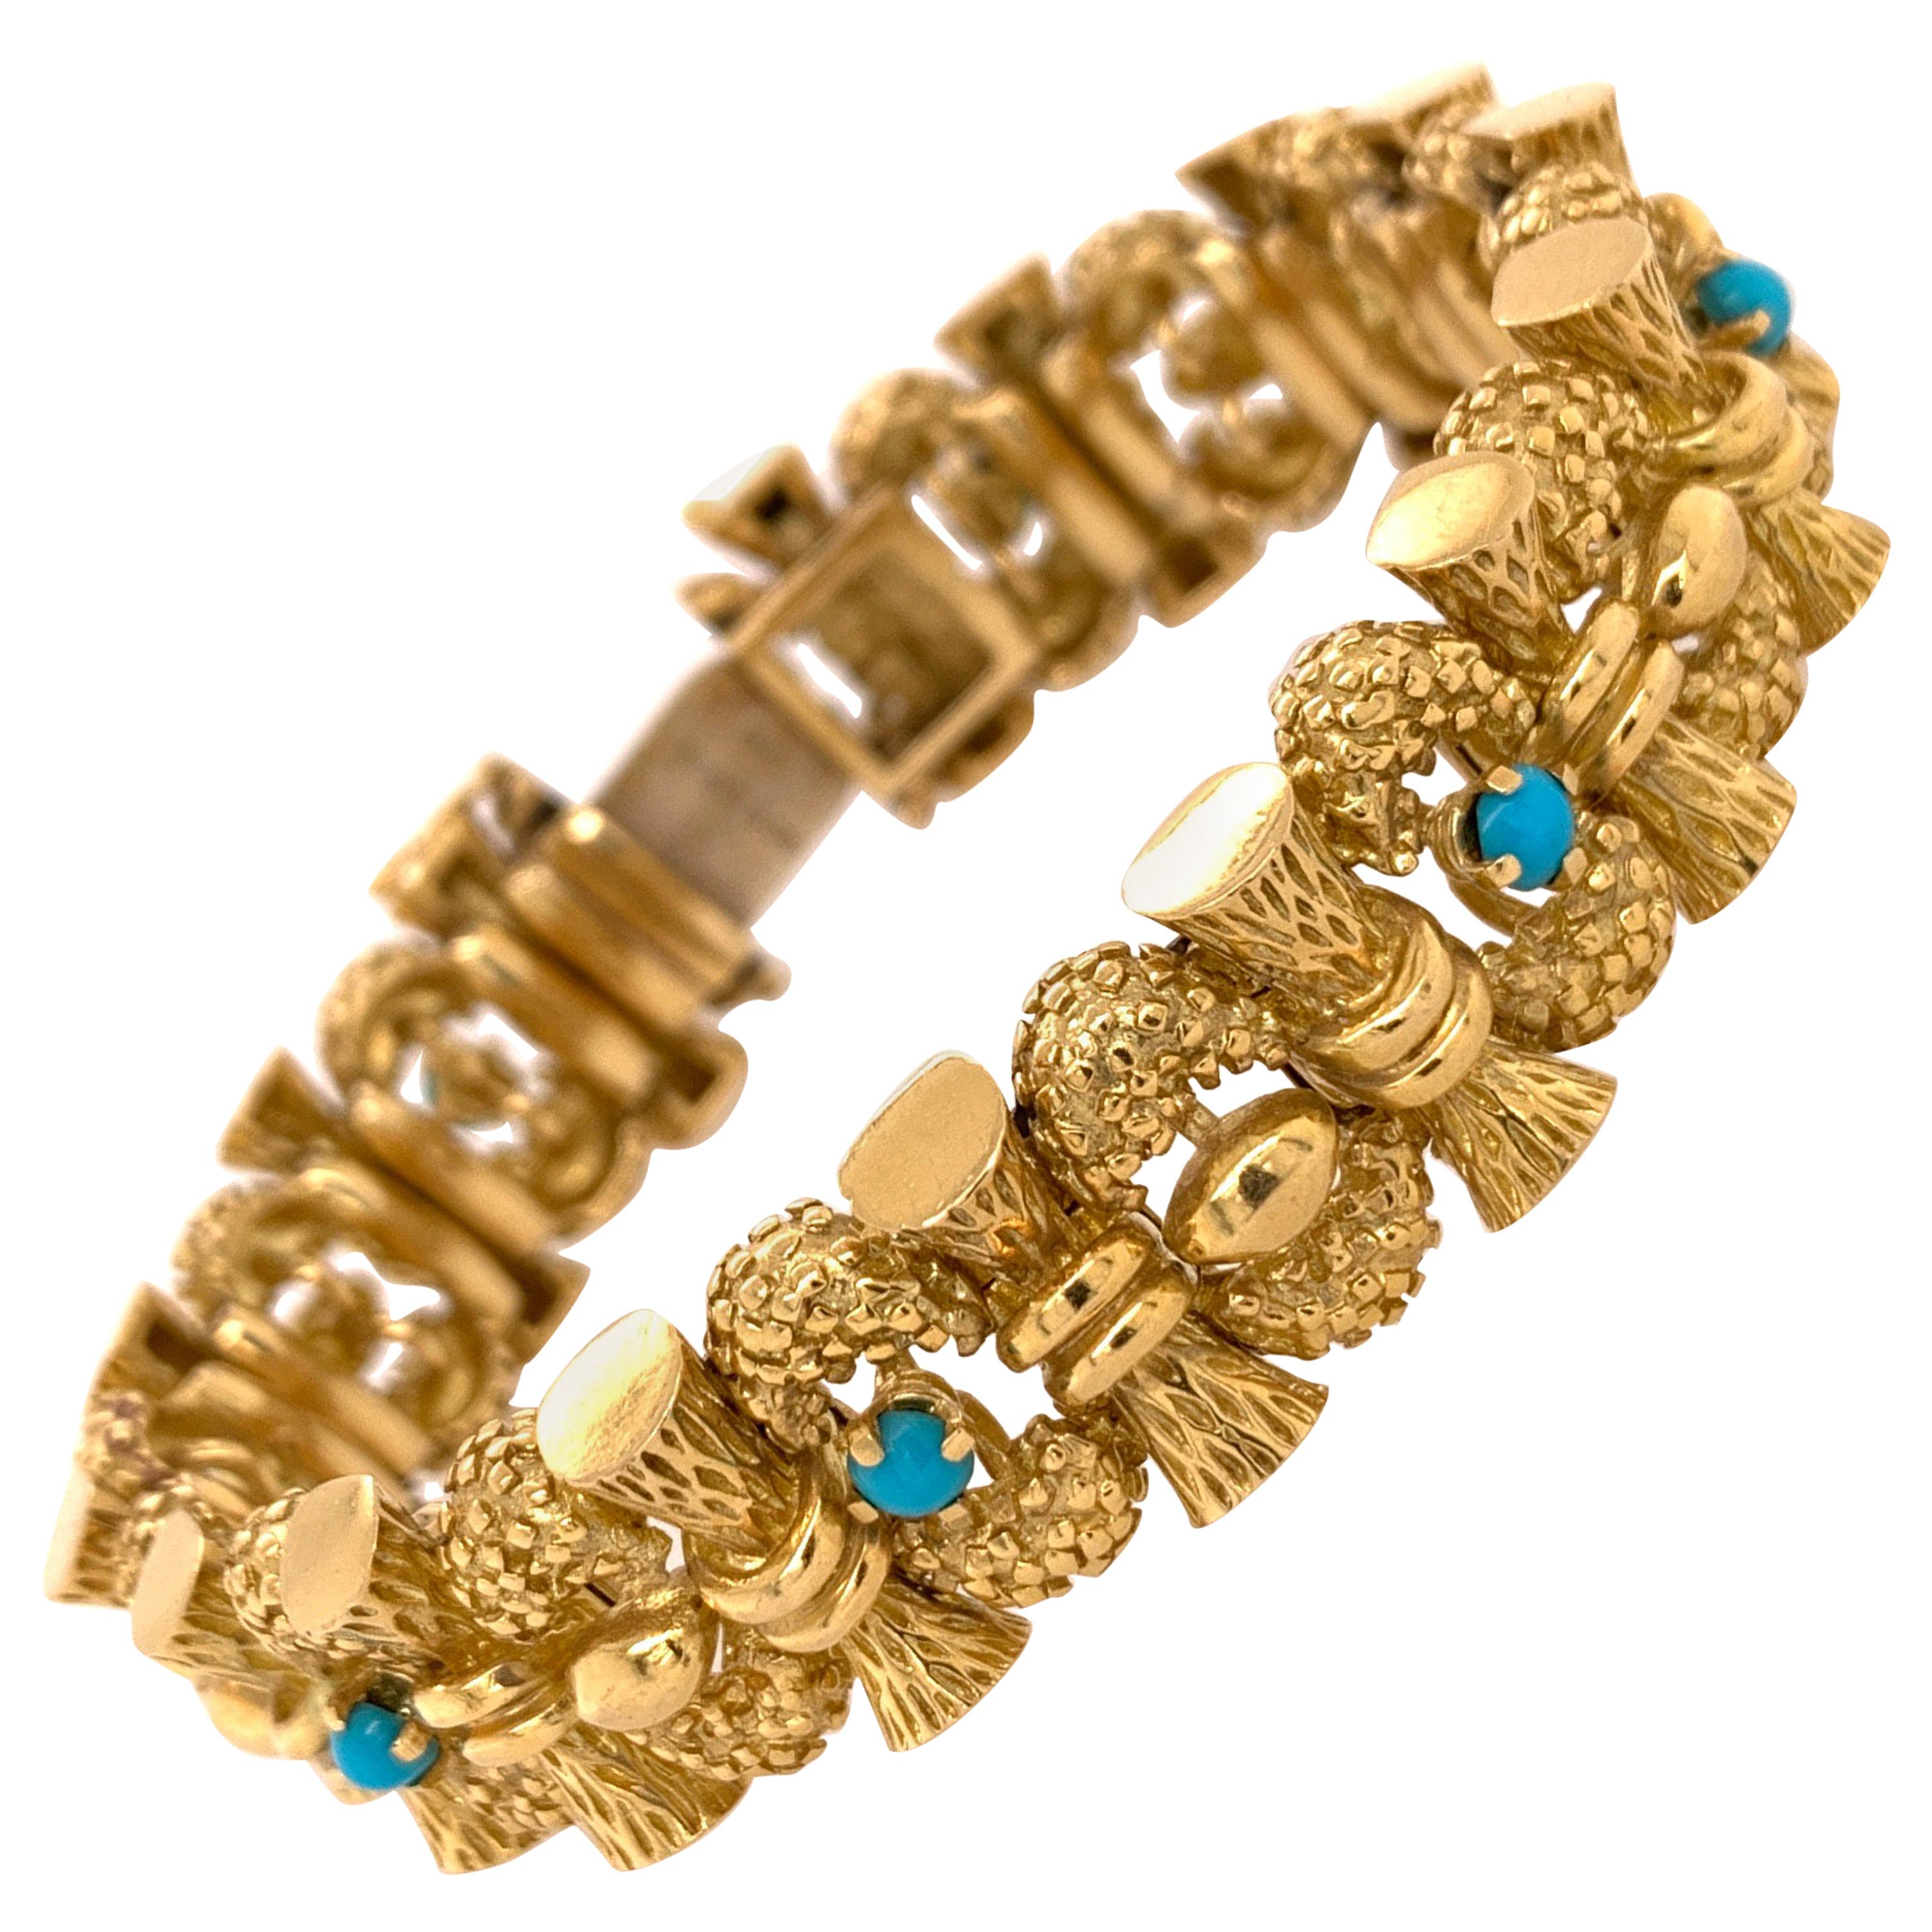 Retro Original Tiffany & Company Yellow Gold and Turquoise Bracelet Circa 1960